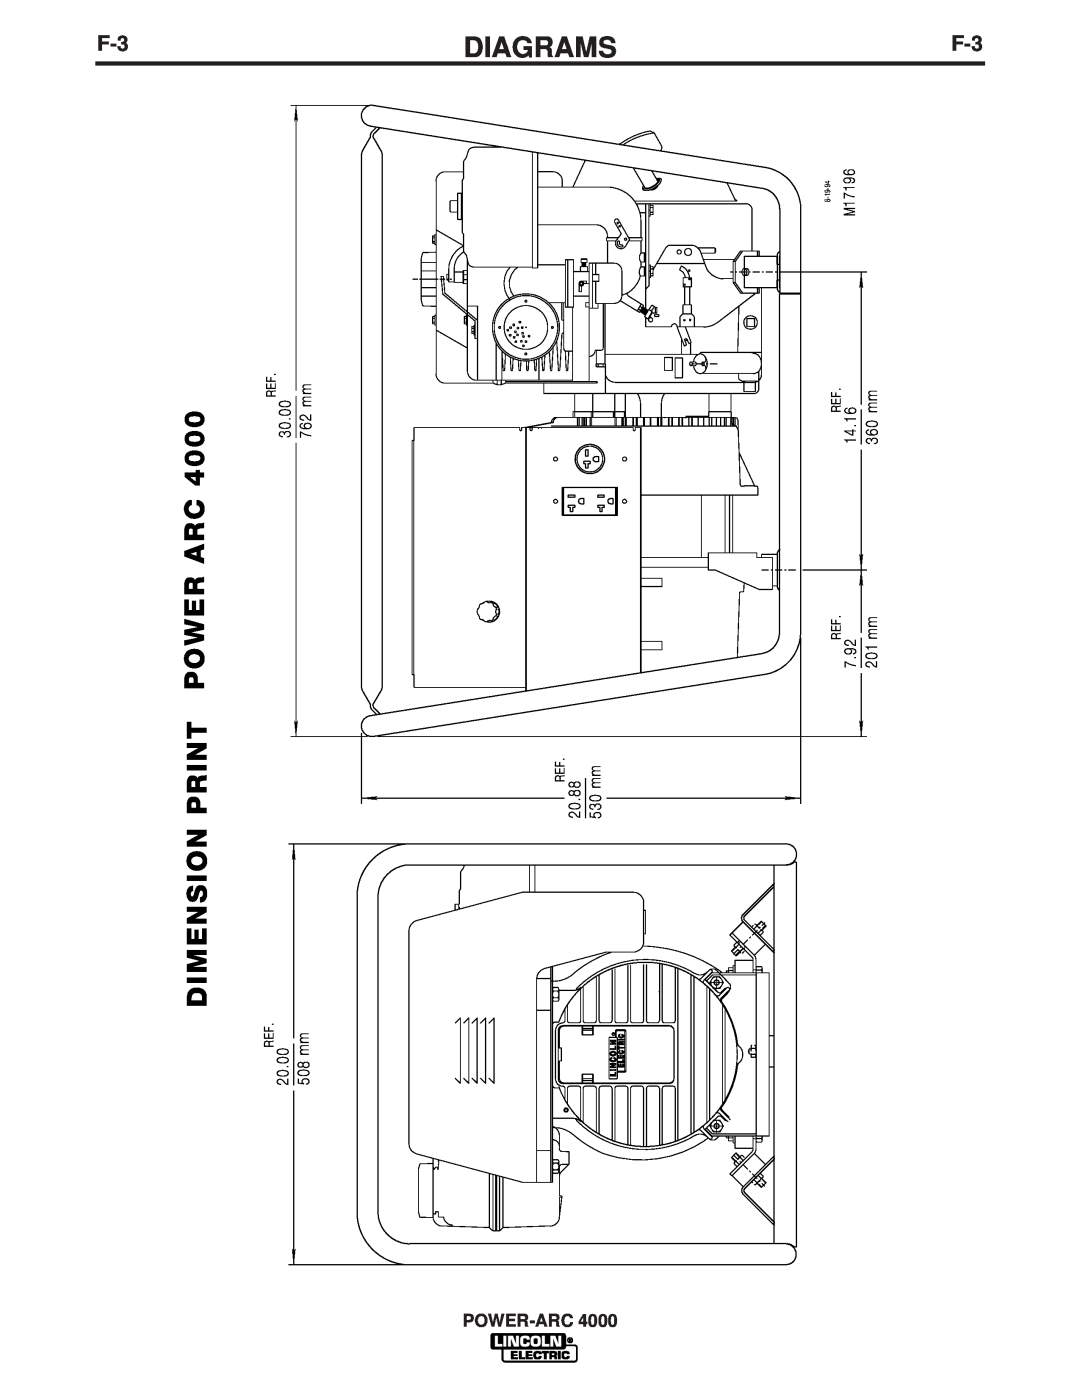 Lincoln Electric 4000 Diagrams, Dimension Print Power Arc, Power-Arc, 20.00, 30.00, 508 mm, 762 mm, 20.88 530 mm, M17196 